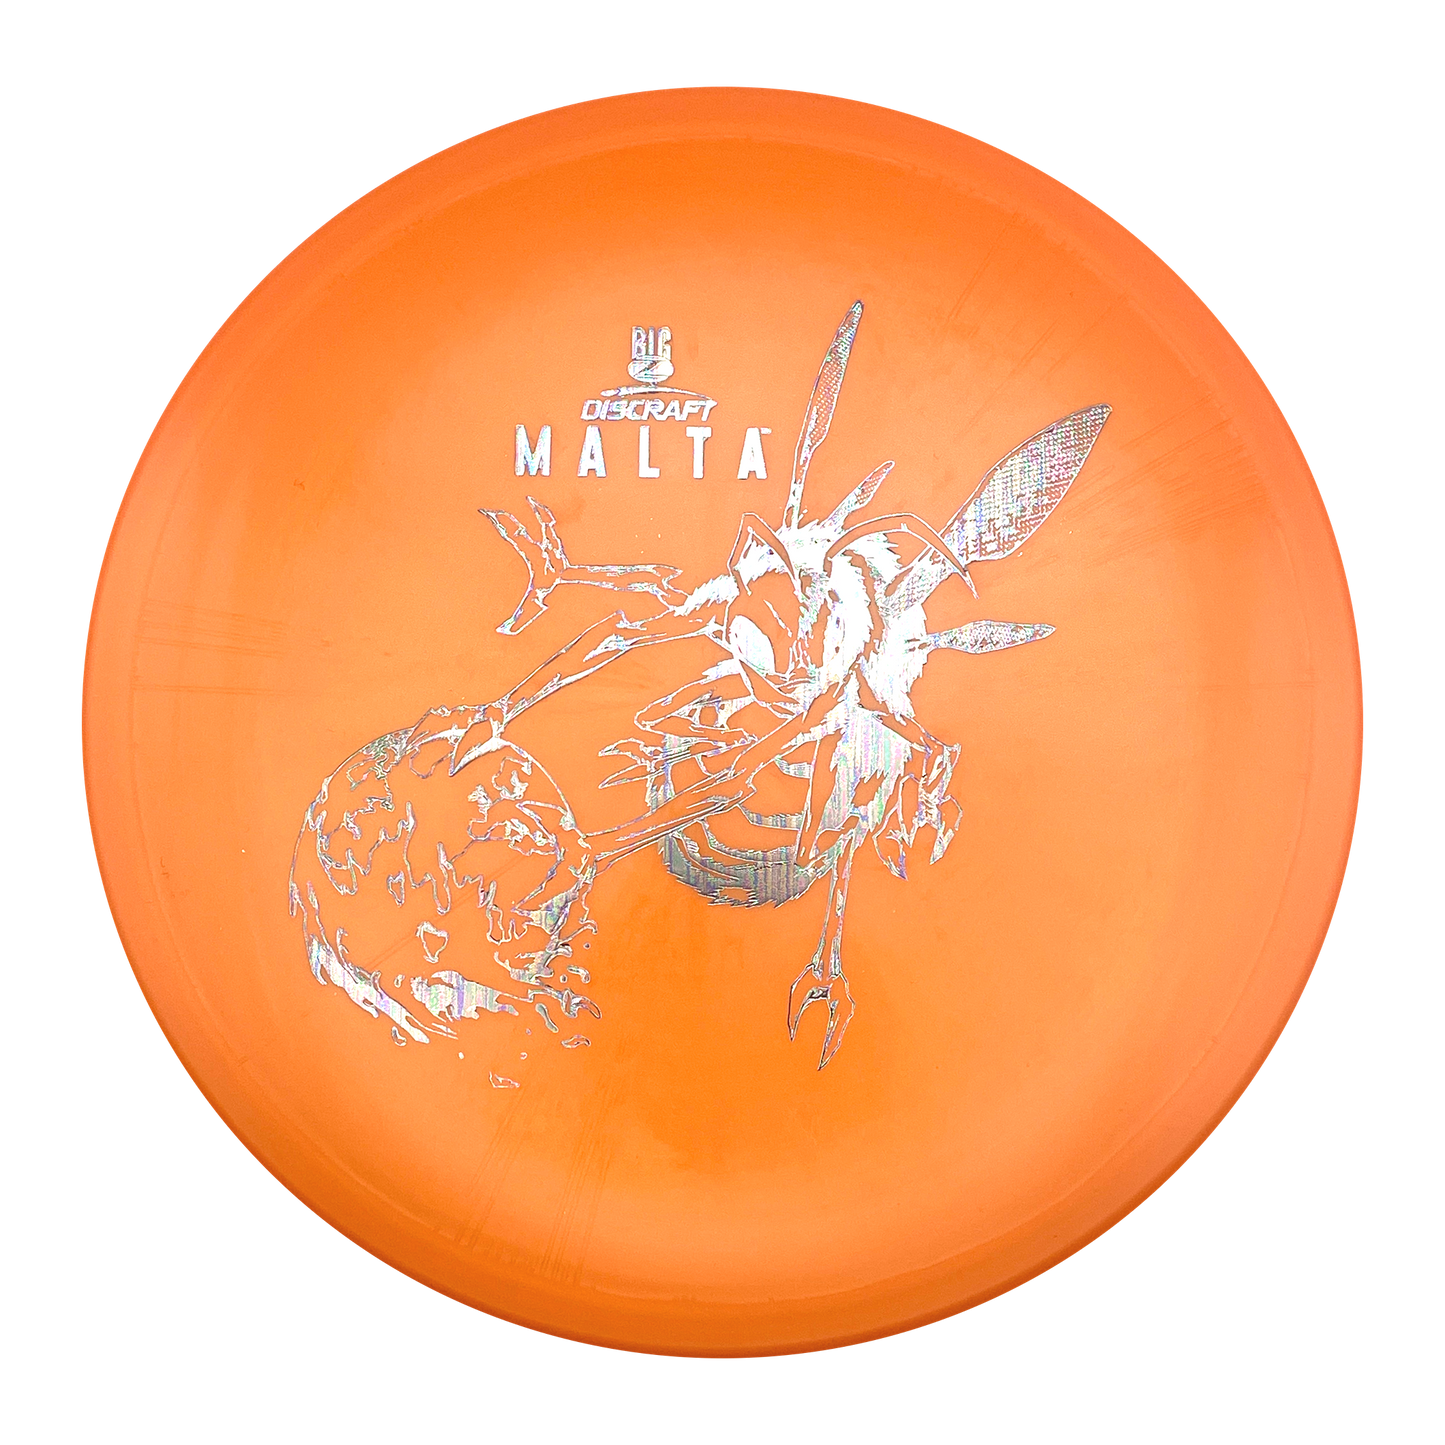 Discraft Malta - Paul McBeth - Big Z Line - Orange